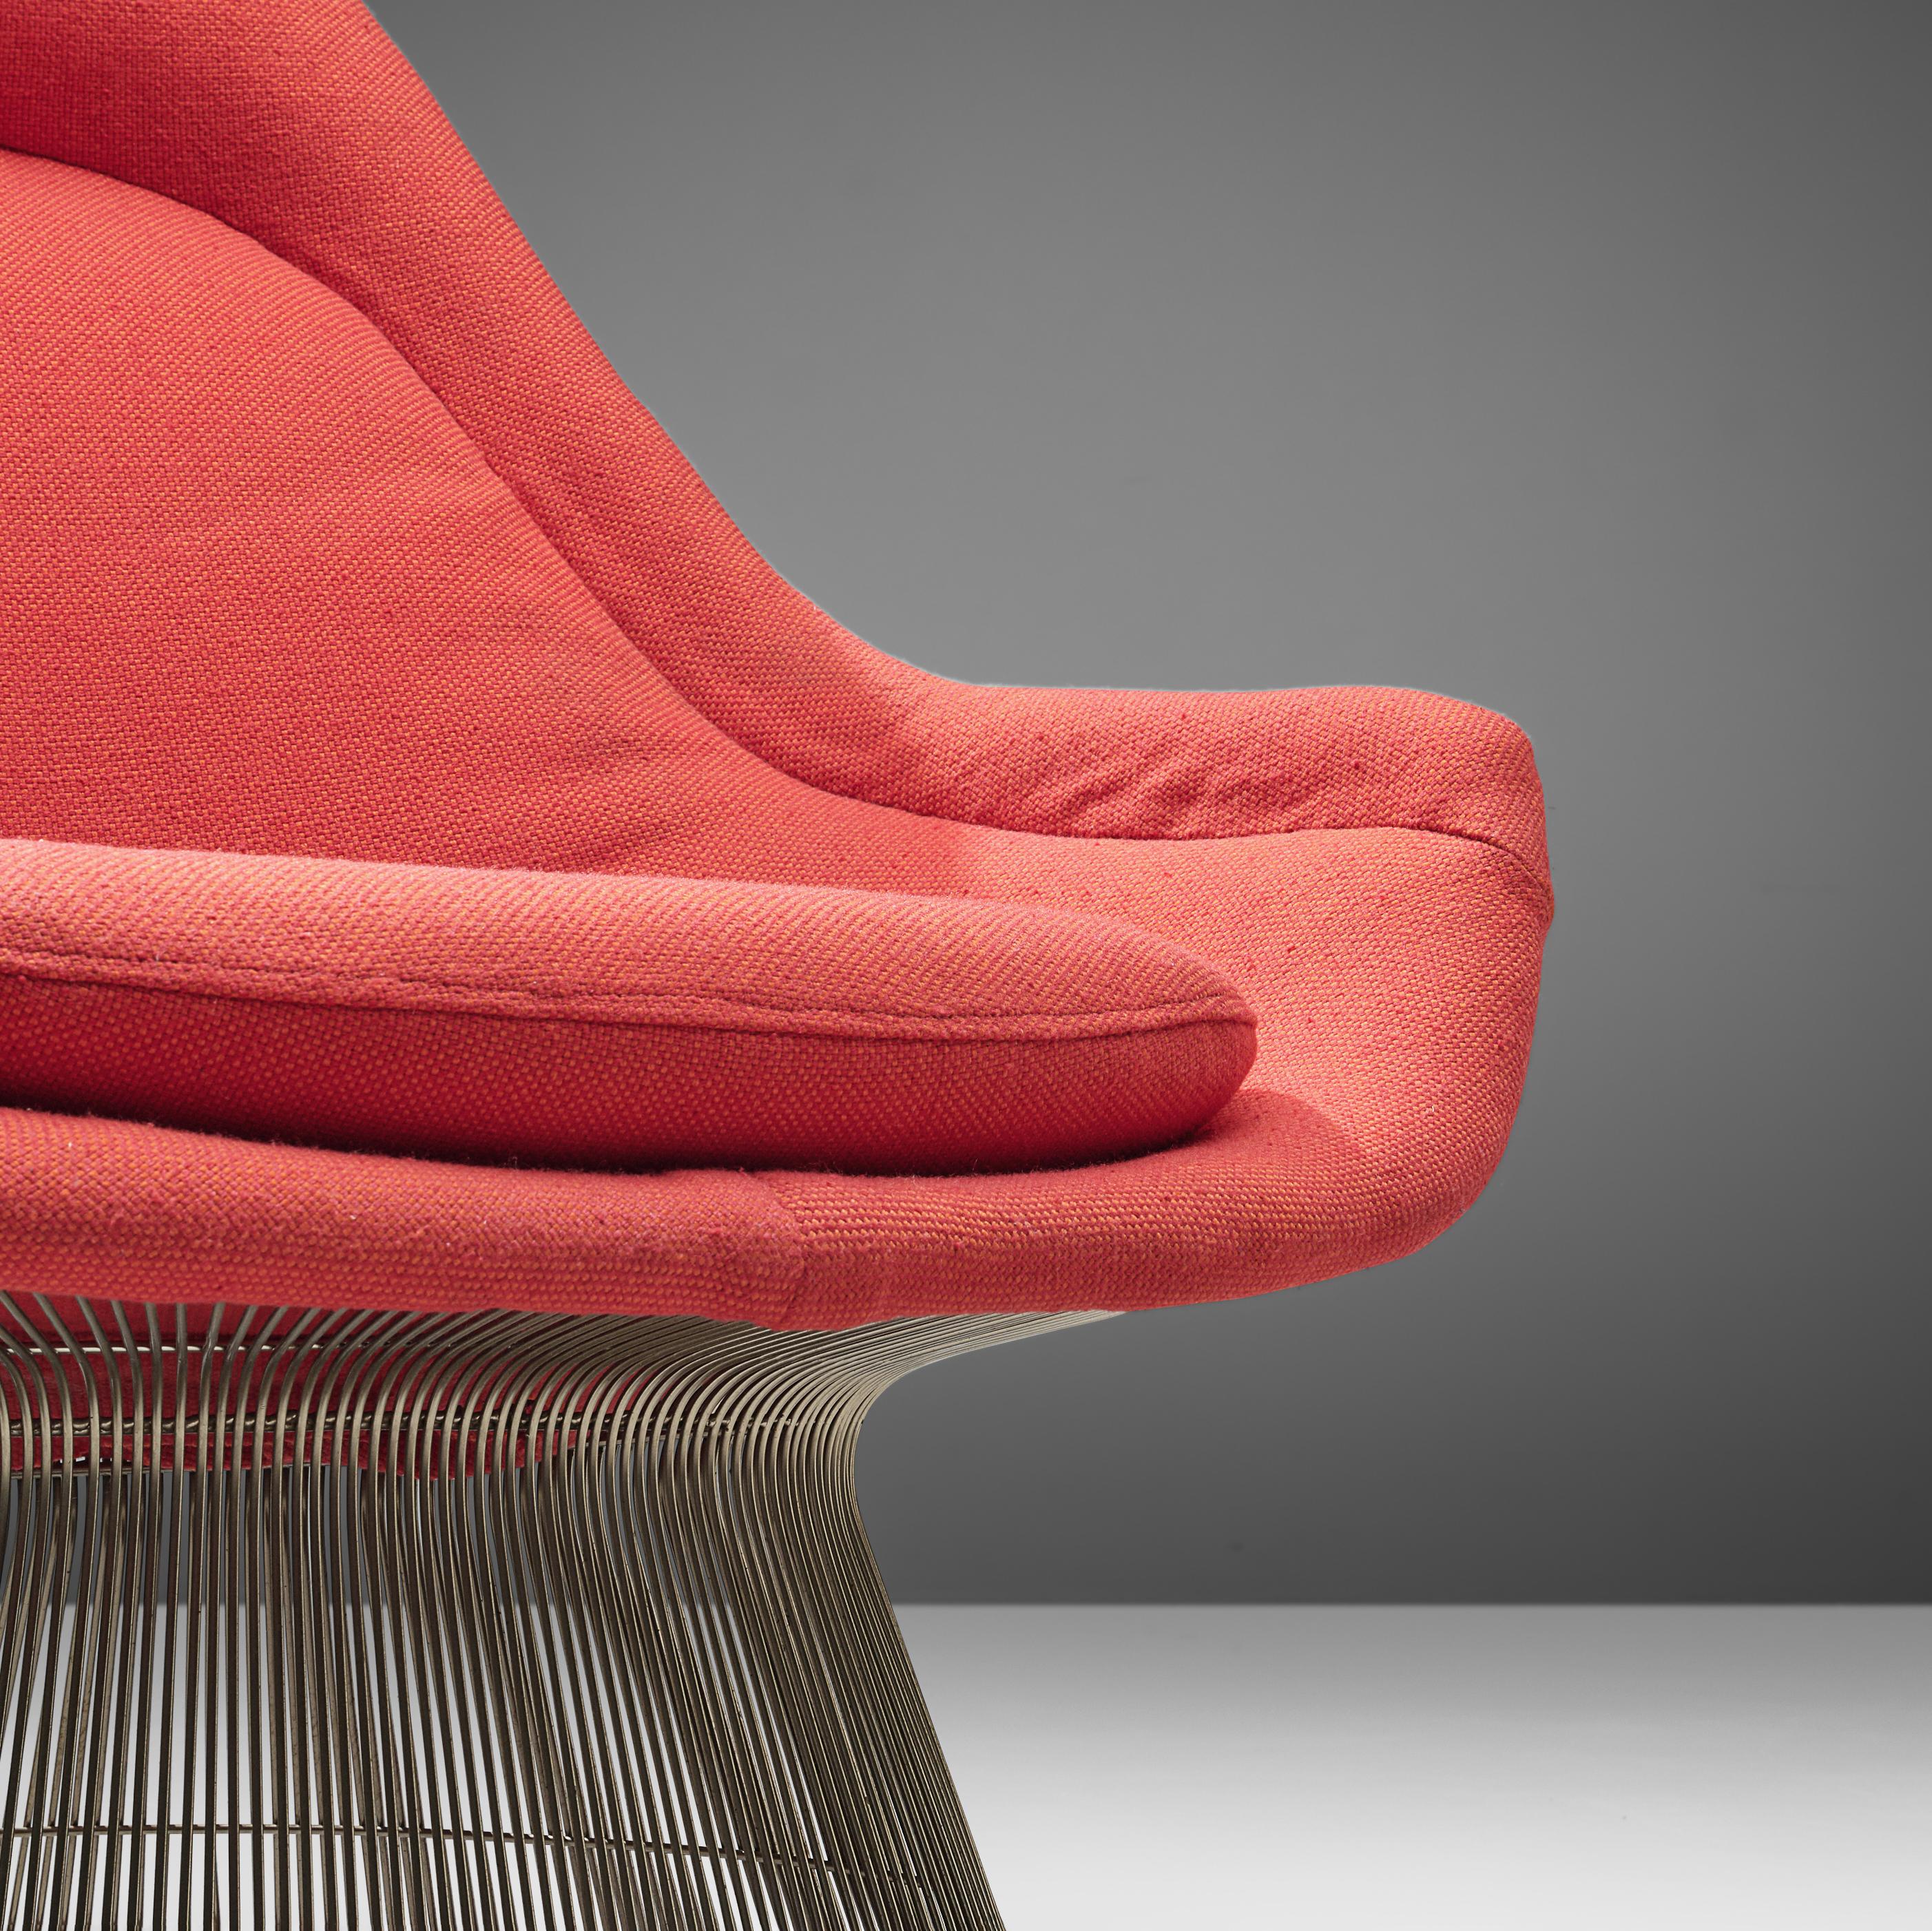 Steel Warren Platner for Knoll Lounge Chair Model '1705' in Red Upholstery